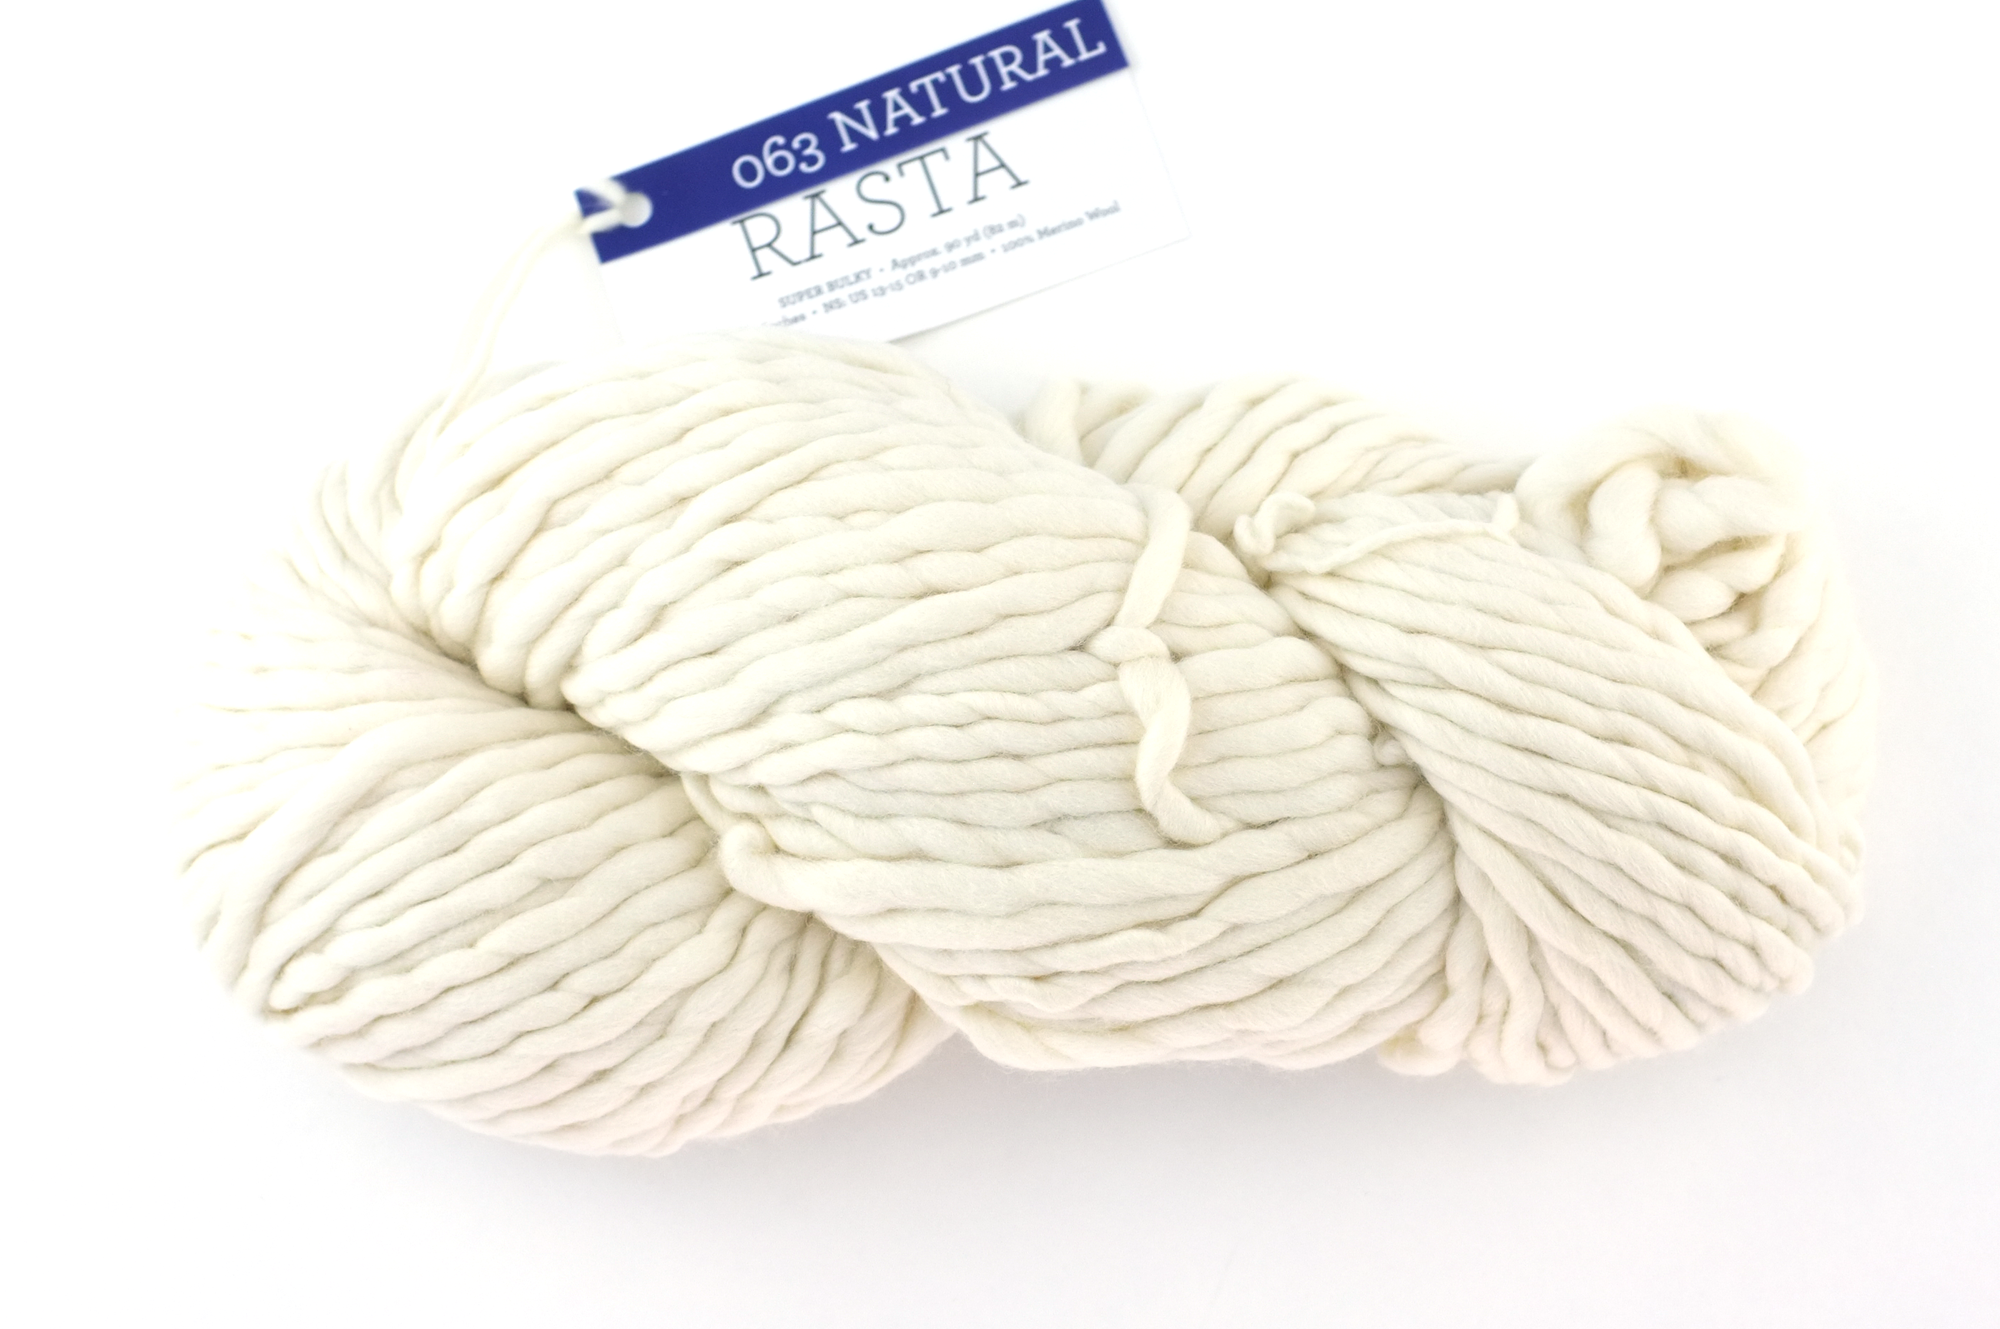 Malabrigo Rasta in color Natural, Super Bulky Merino Wool Knitting Yarn,  neutral shade, #063 Red Beauty Textiles